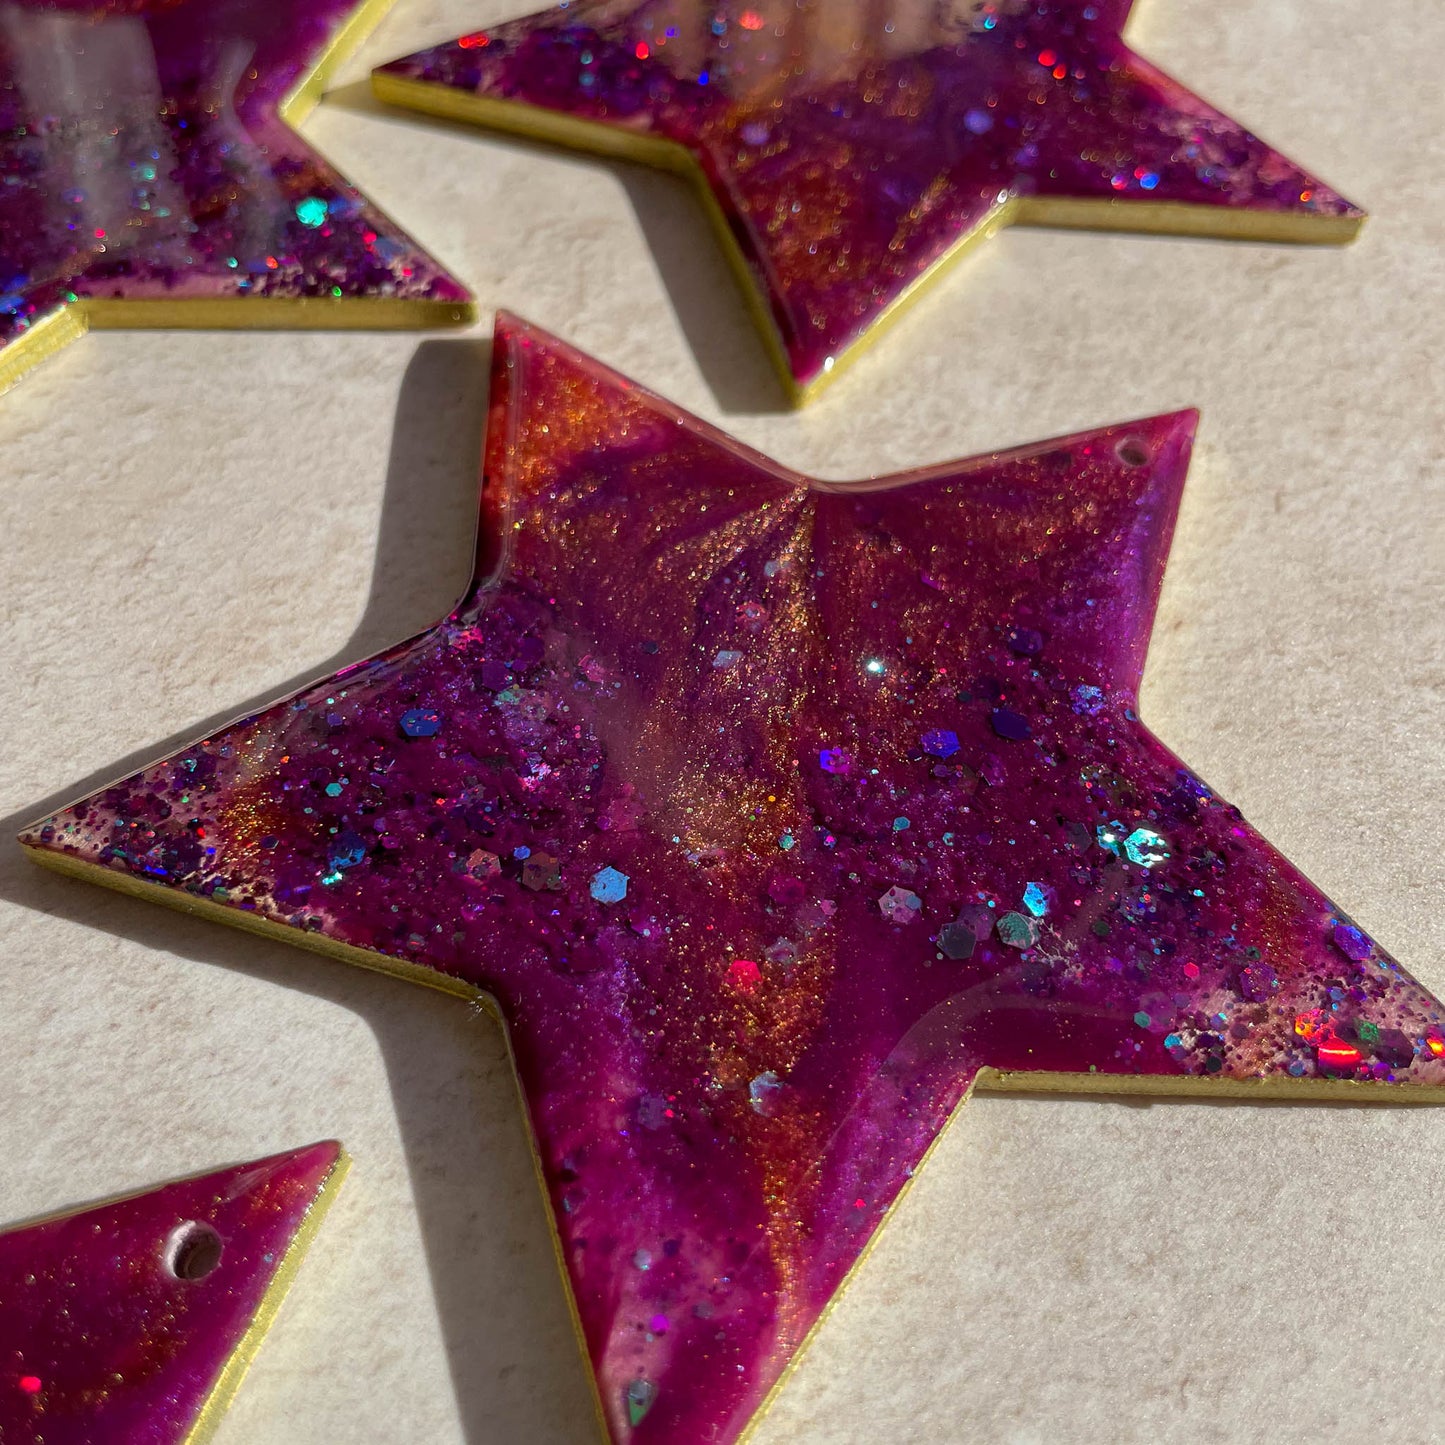 Purple & Copper Sparkly Star Christmas Tree Decoration